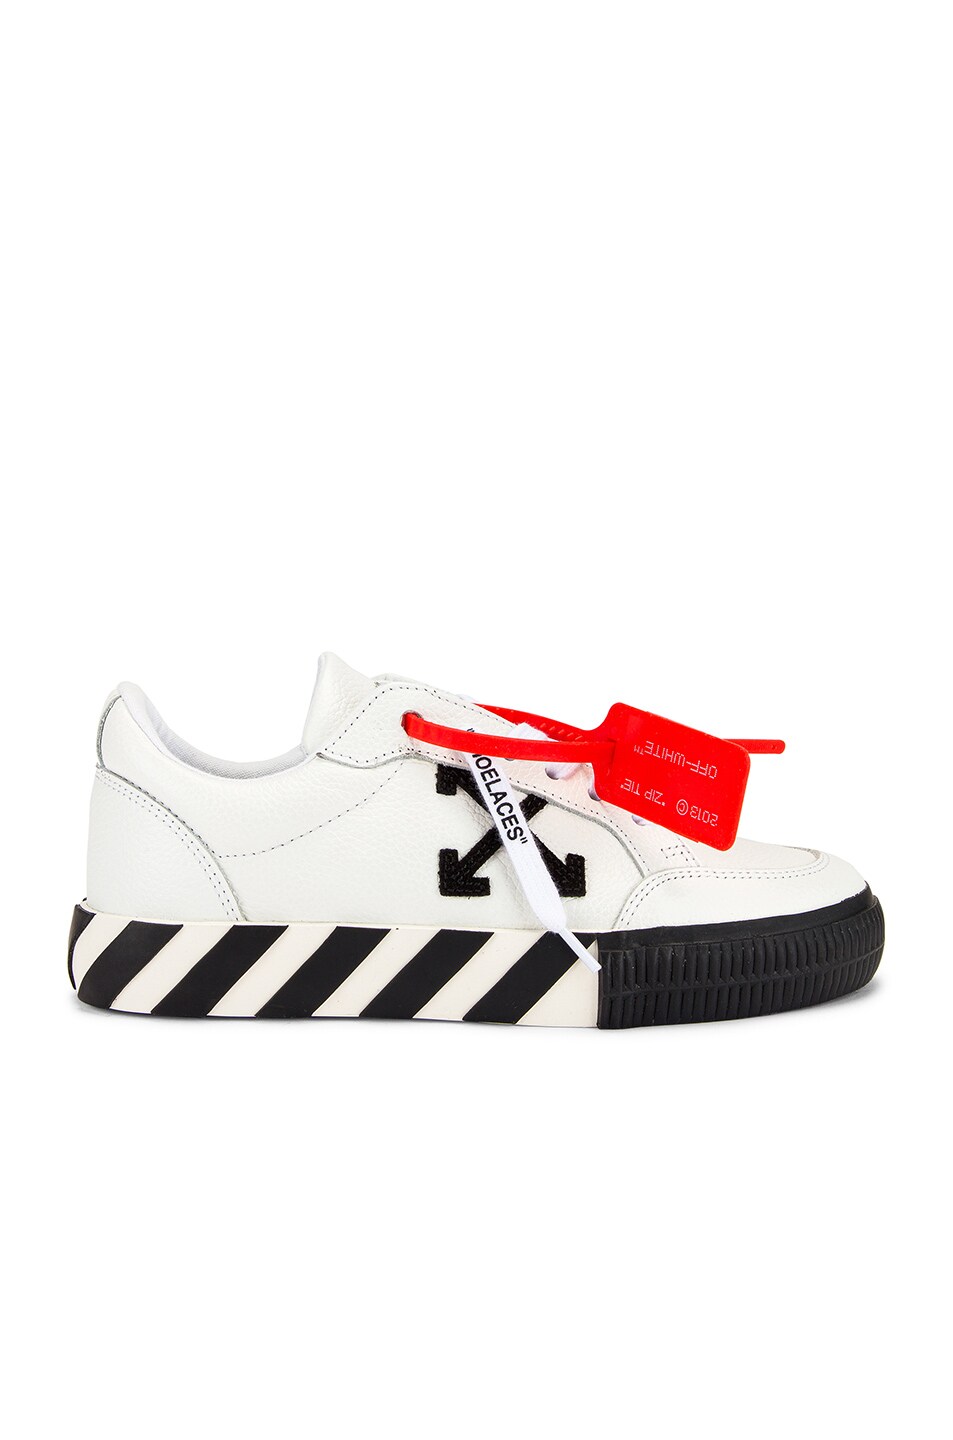 Image 1 of OFF-WHITE Arrow Low Vulcanized Sneaker in White & Black